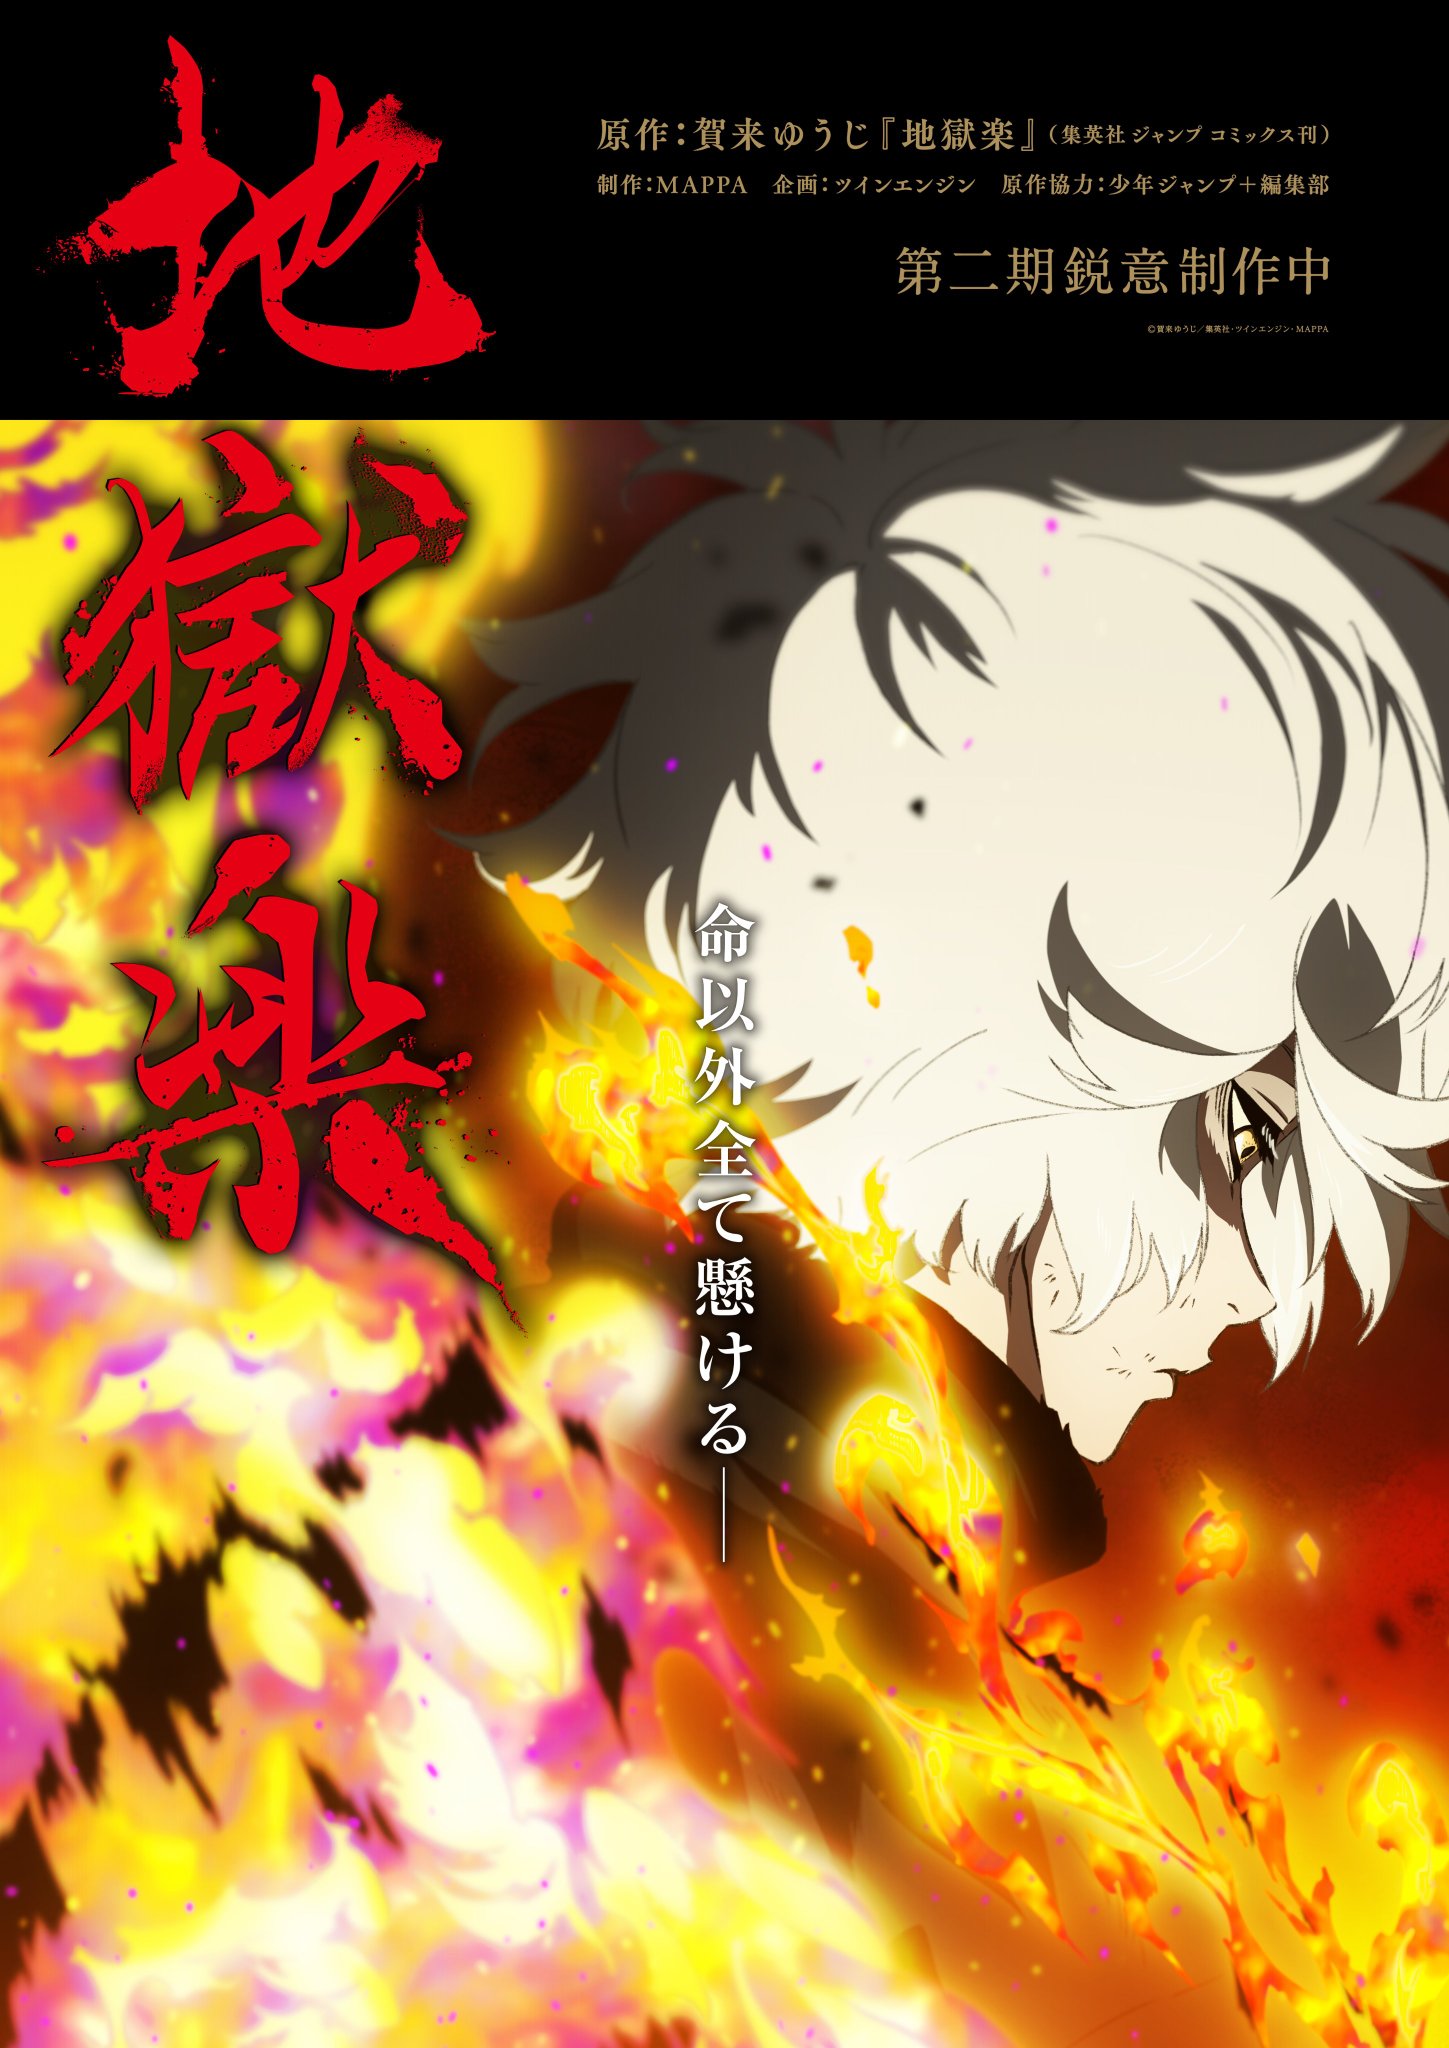 Shuumatsu no harem, capítulo 3 online sub español: fecha y hora de estreno  del anime, Crunchyroll, Manga, México, Japón, Animes